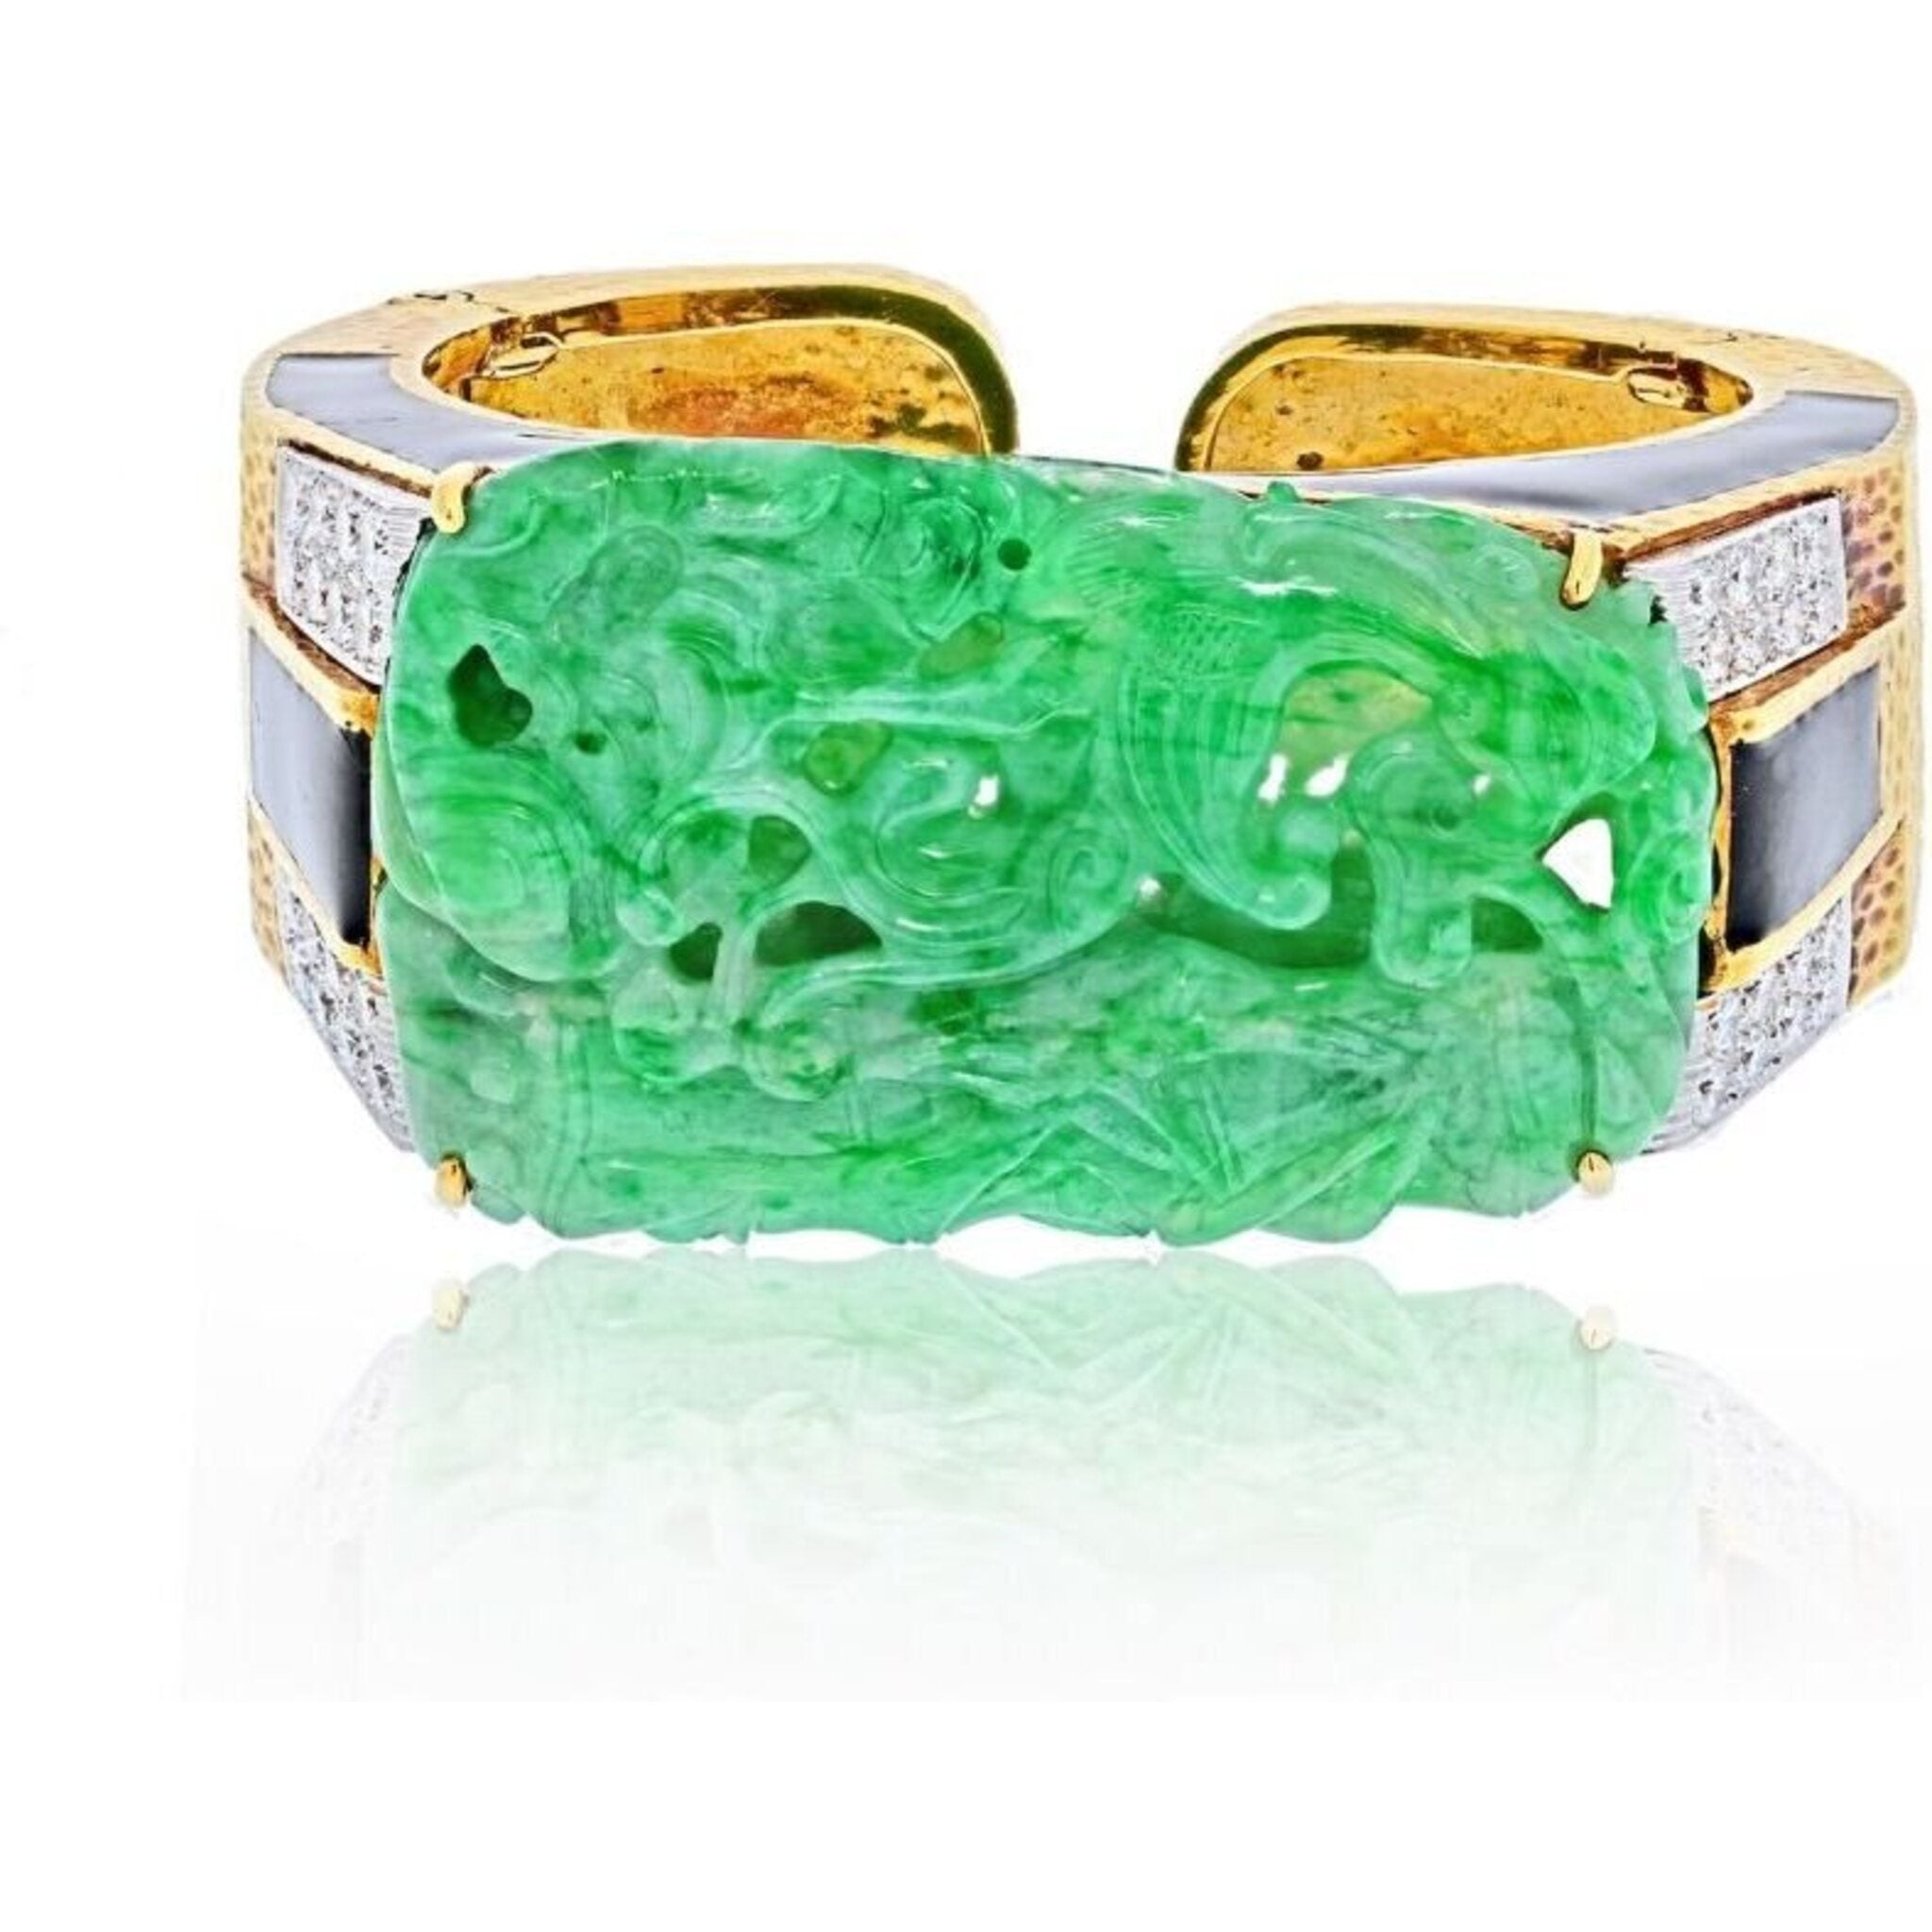 YERTTER Boho Gold Finger Ring Link Bracelet Colorful Crystal Bracelet Green  Crystal Gold Hand Chain Women Girls Accessories Gift Party